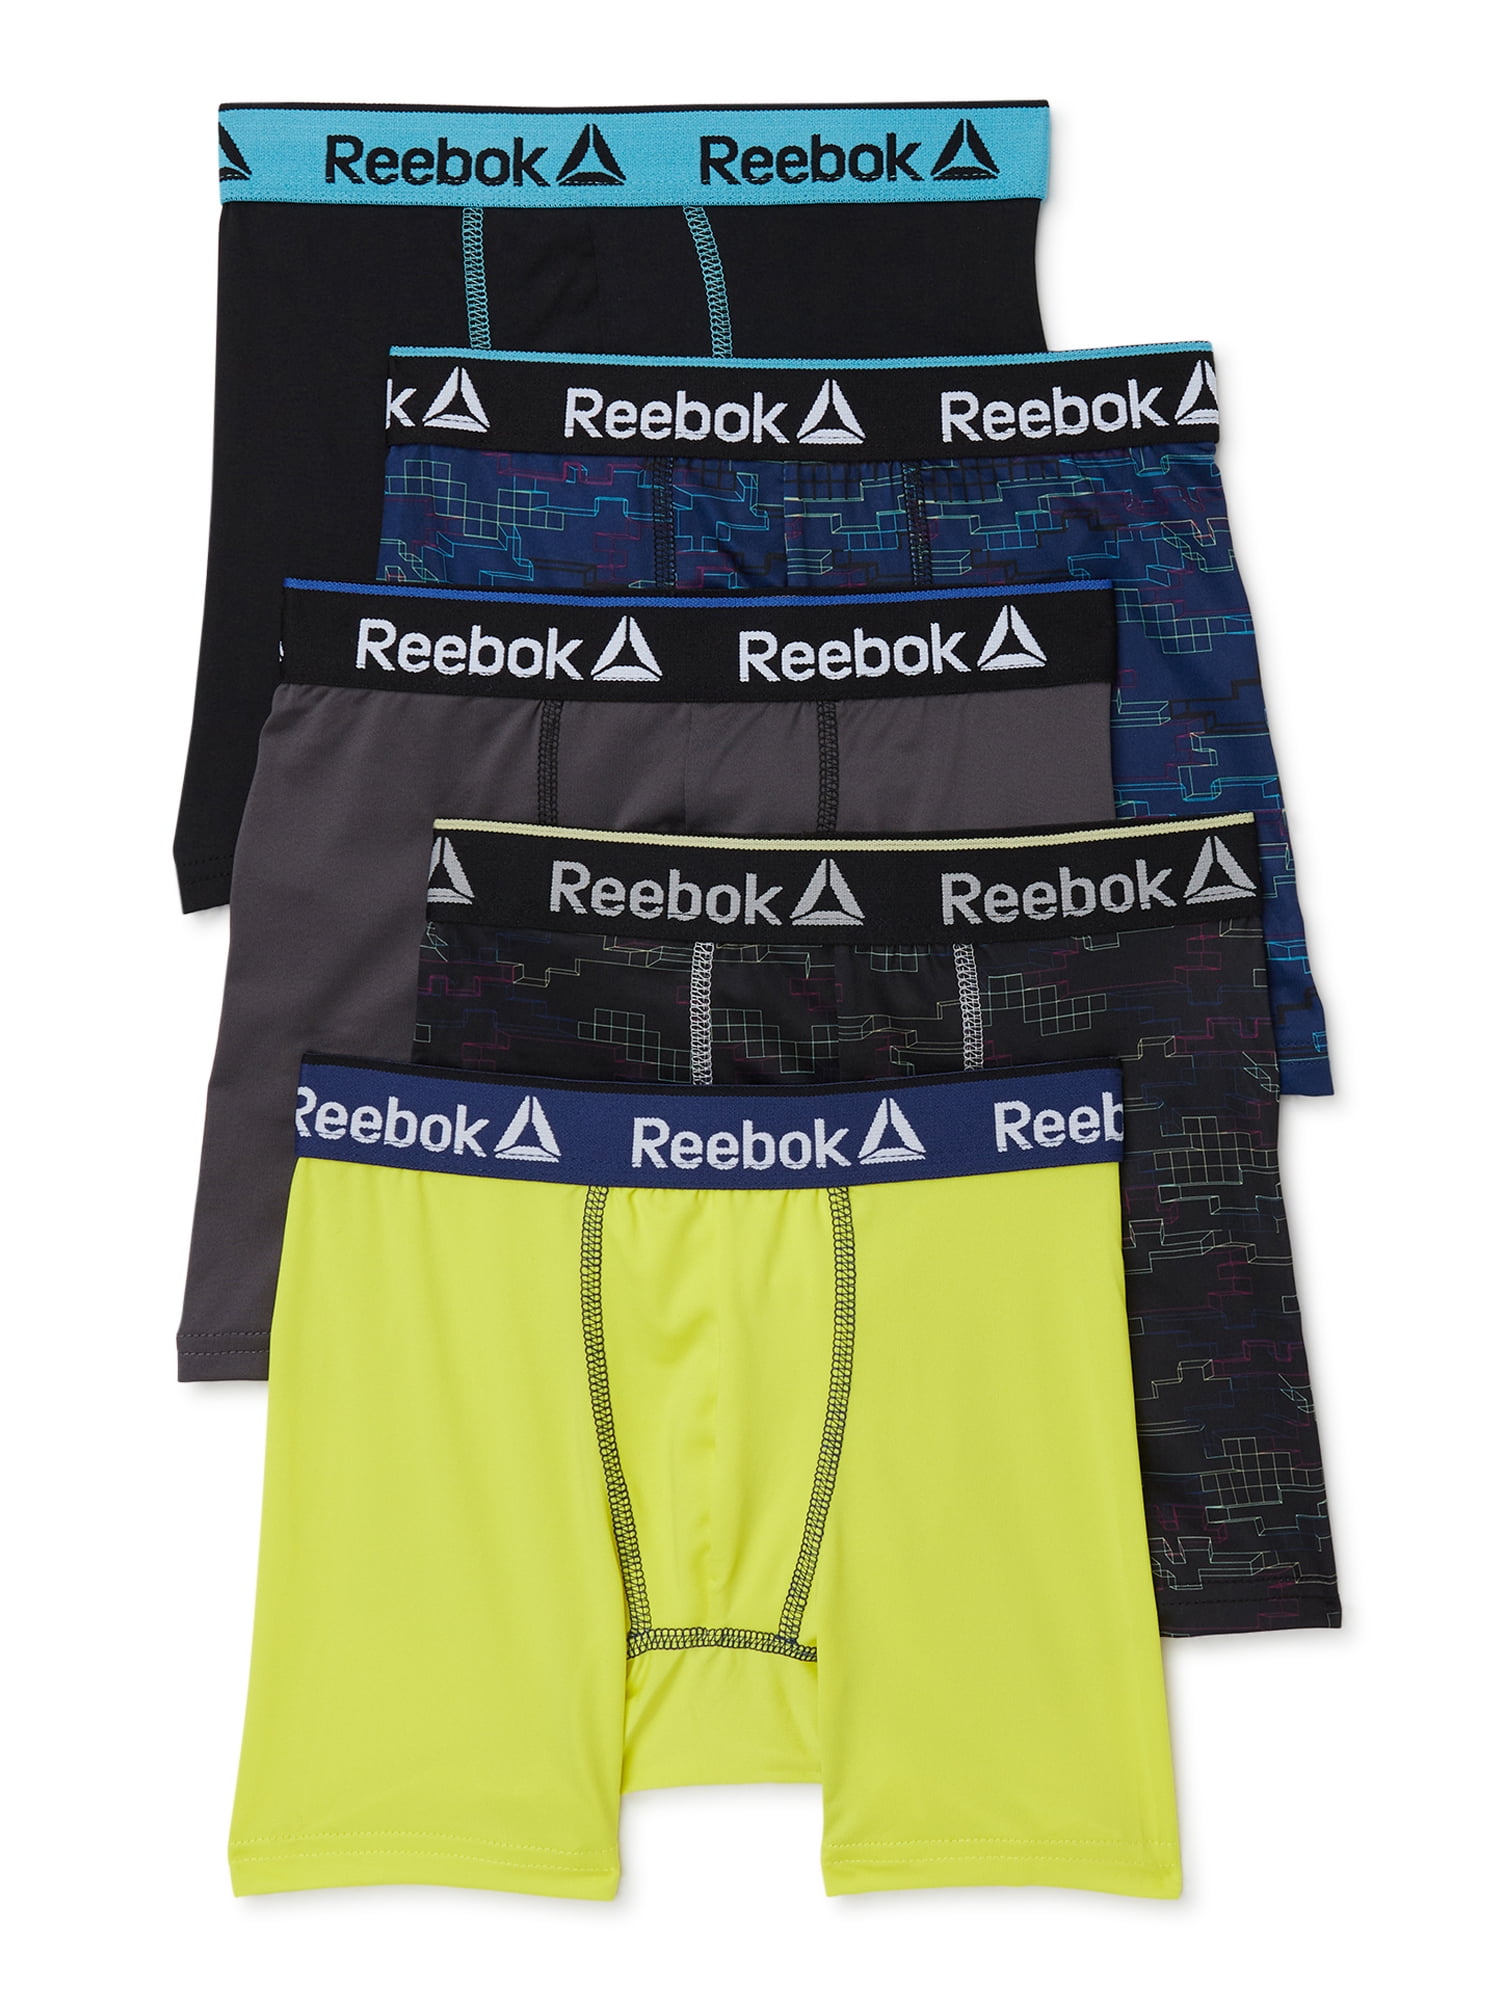 Reebok Boys Underwear Performance Boxer Briefs, Small, 5-Pack 